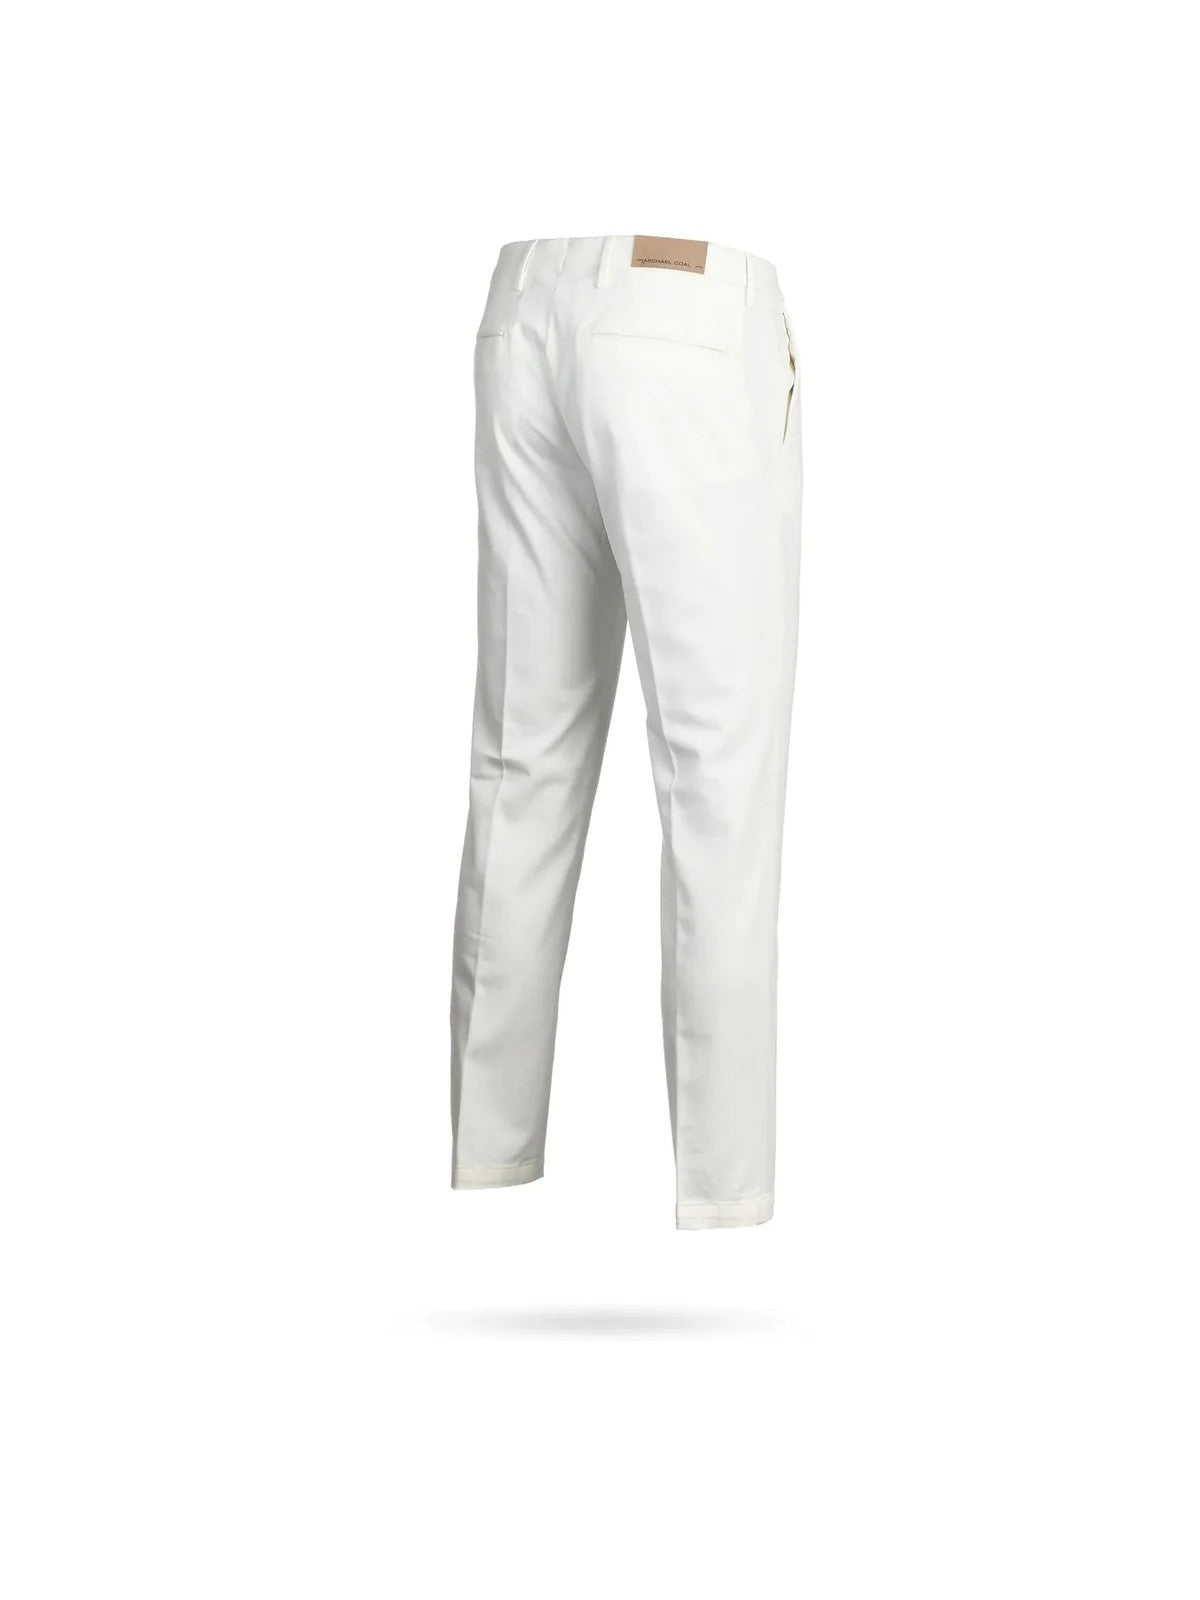 MICHAEL COAL Pantalone Uomo  MCBRA3862F22L 009 Bianco